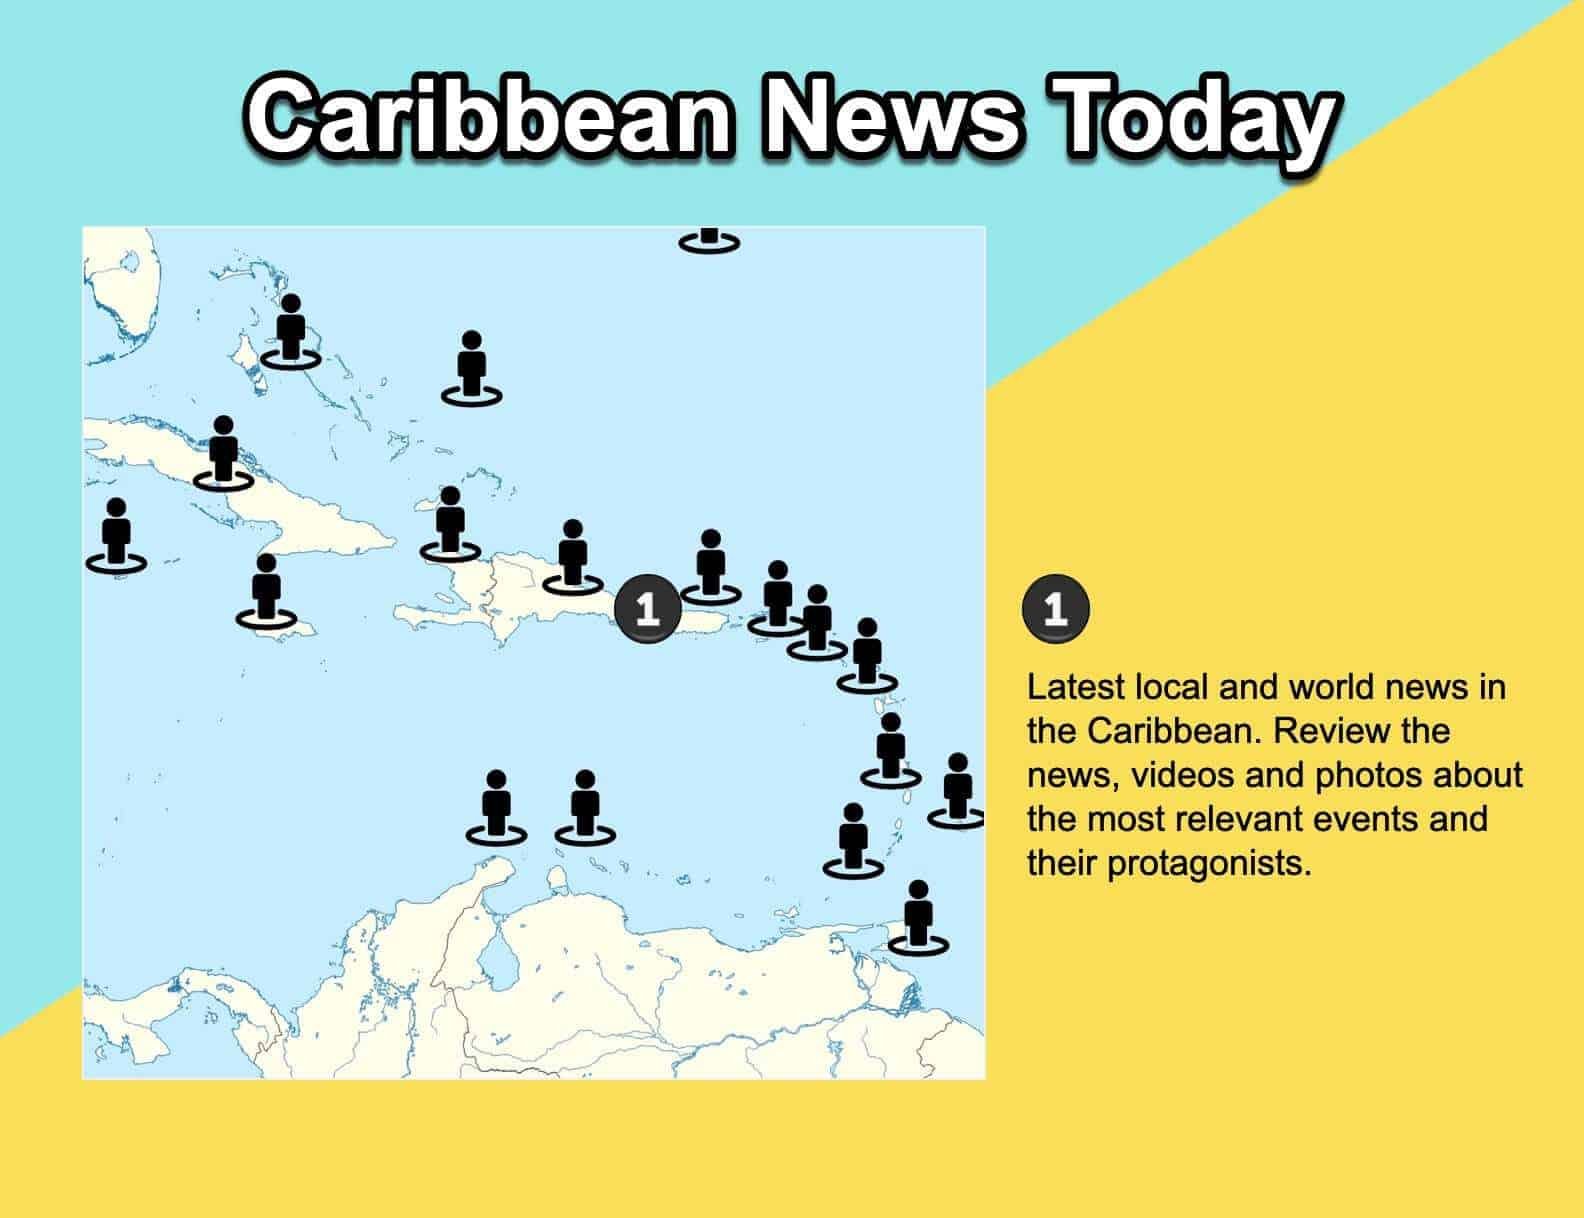 Caribbean News Today - World News Today